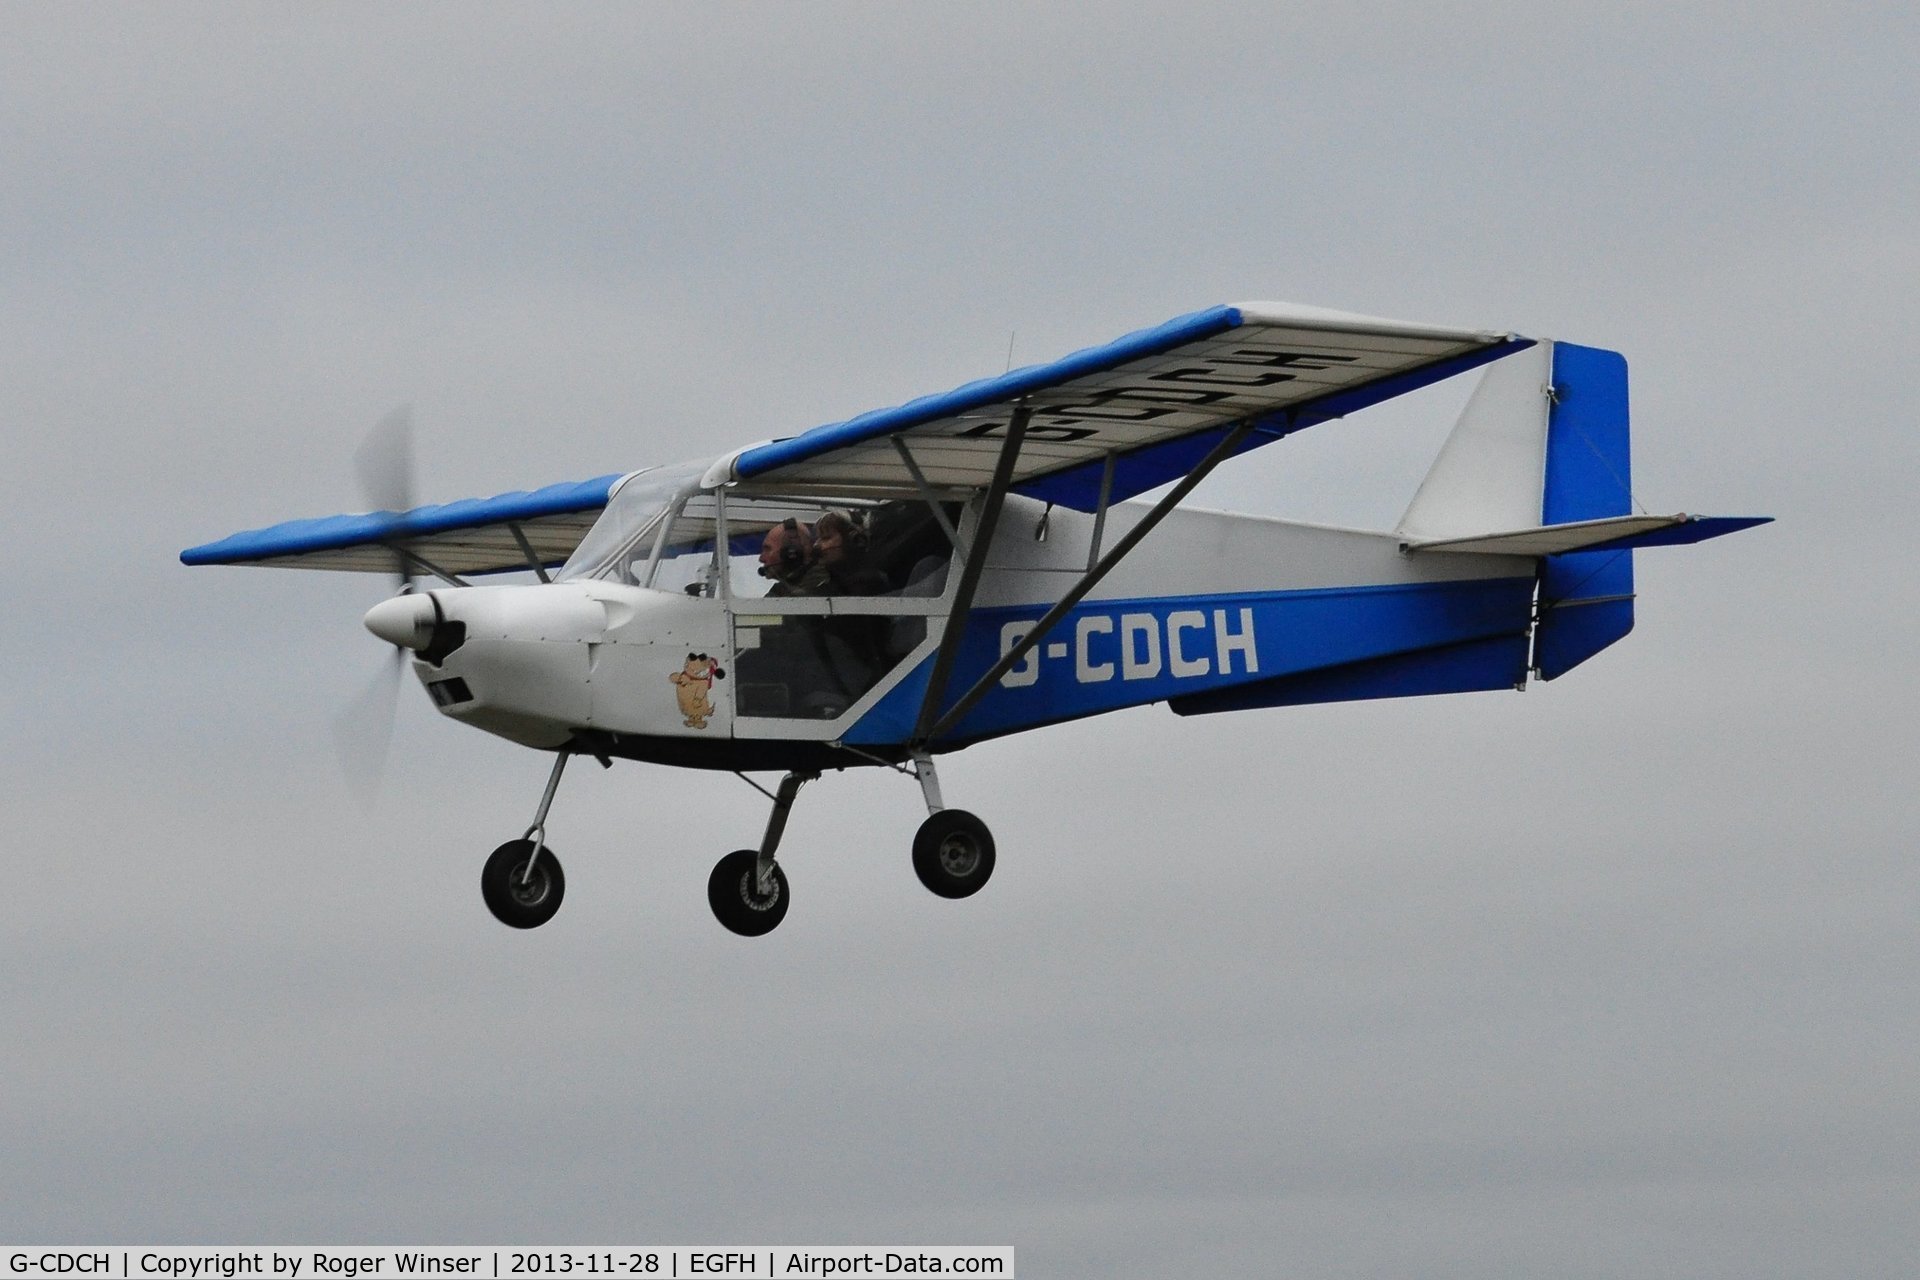 G-CDCH, 2004 Best Off Skyranger 912(2) C/N BMAA/HB/384, Skyranger on finals Runway 28 to land.